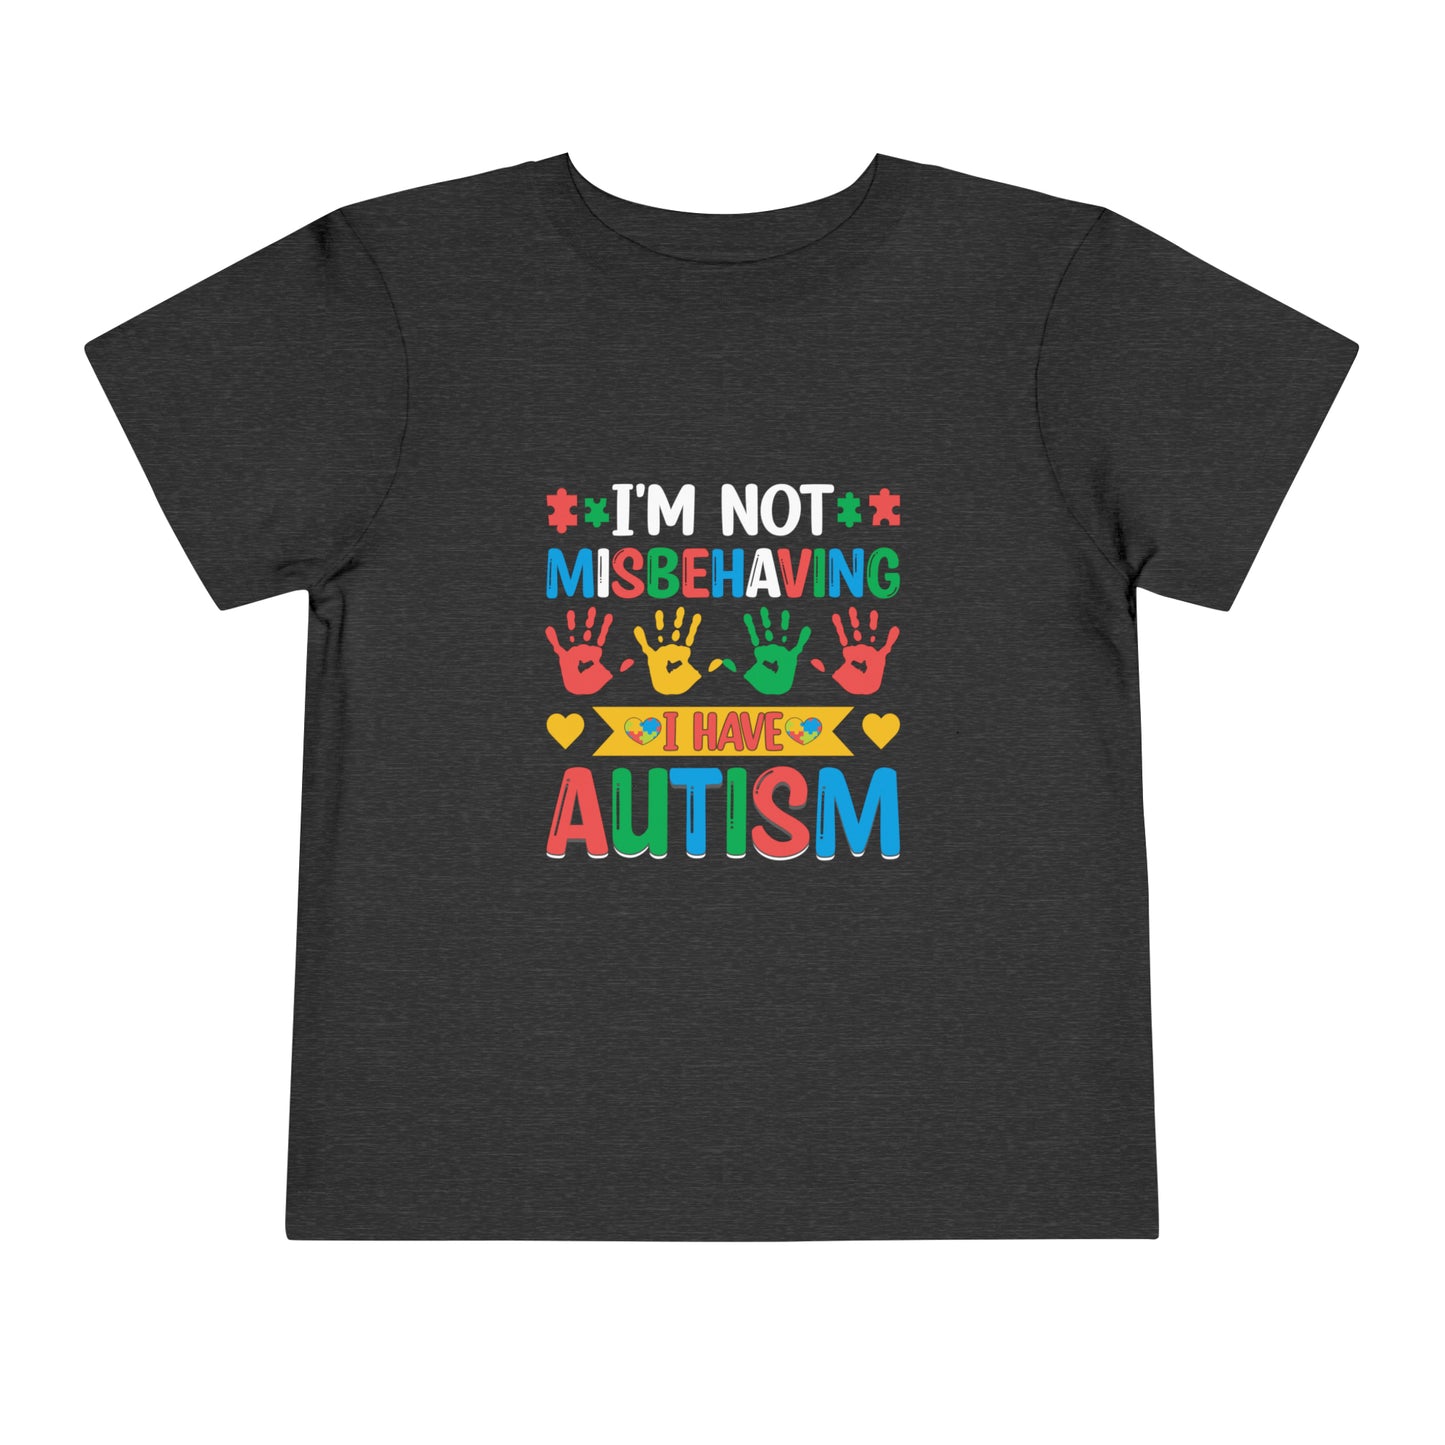 Not Misbehaving- Autism - Autism Awareness Advocate Toddler Short Sleeve Tee